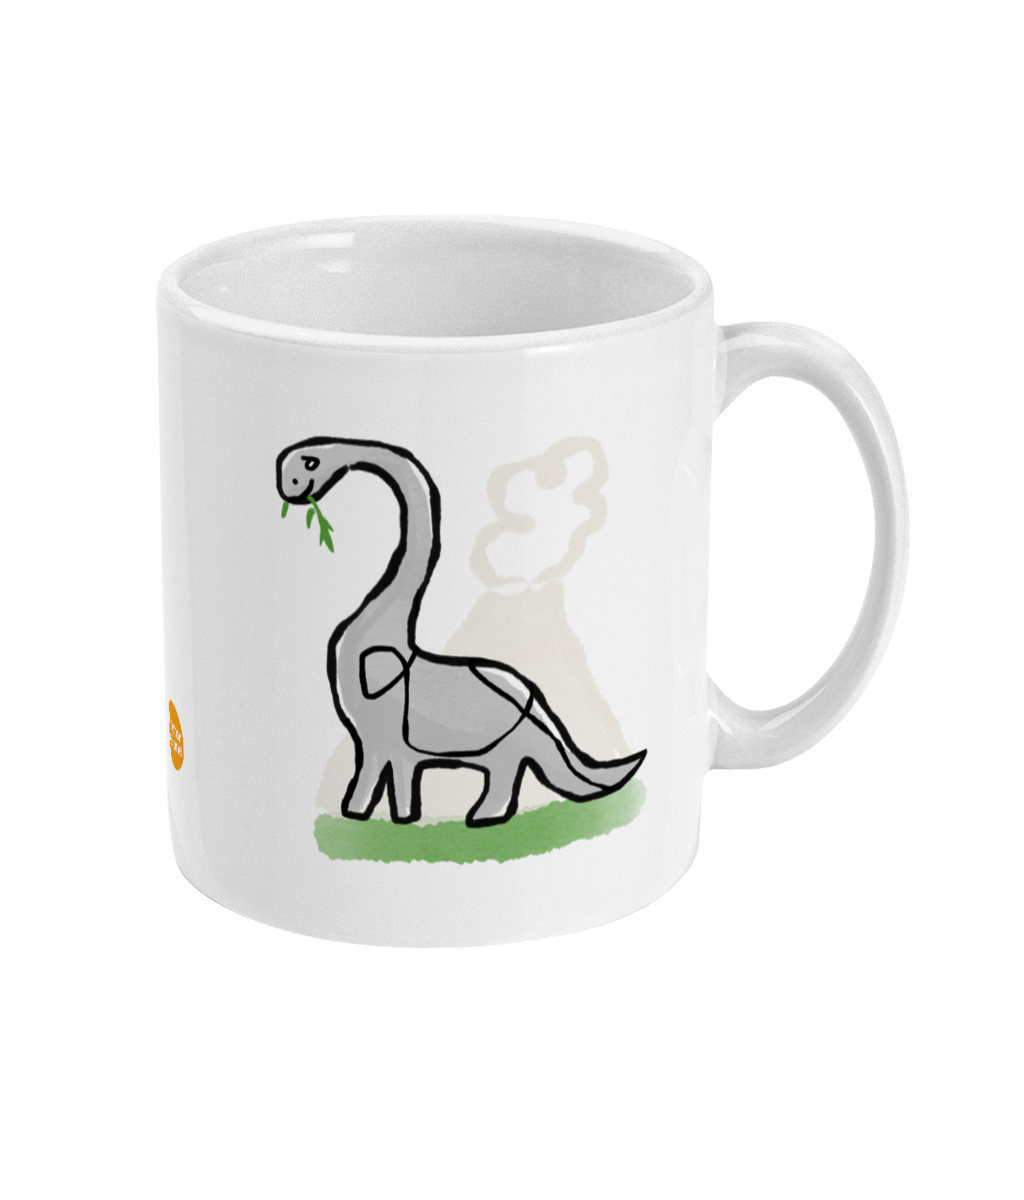 Derek Dinosaur design coffee mug by Hector and Bone Right View